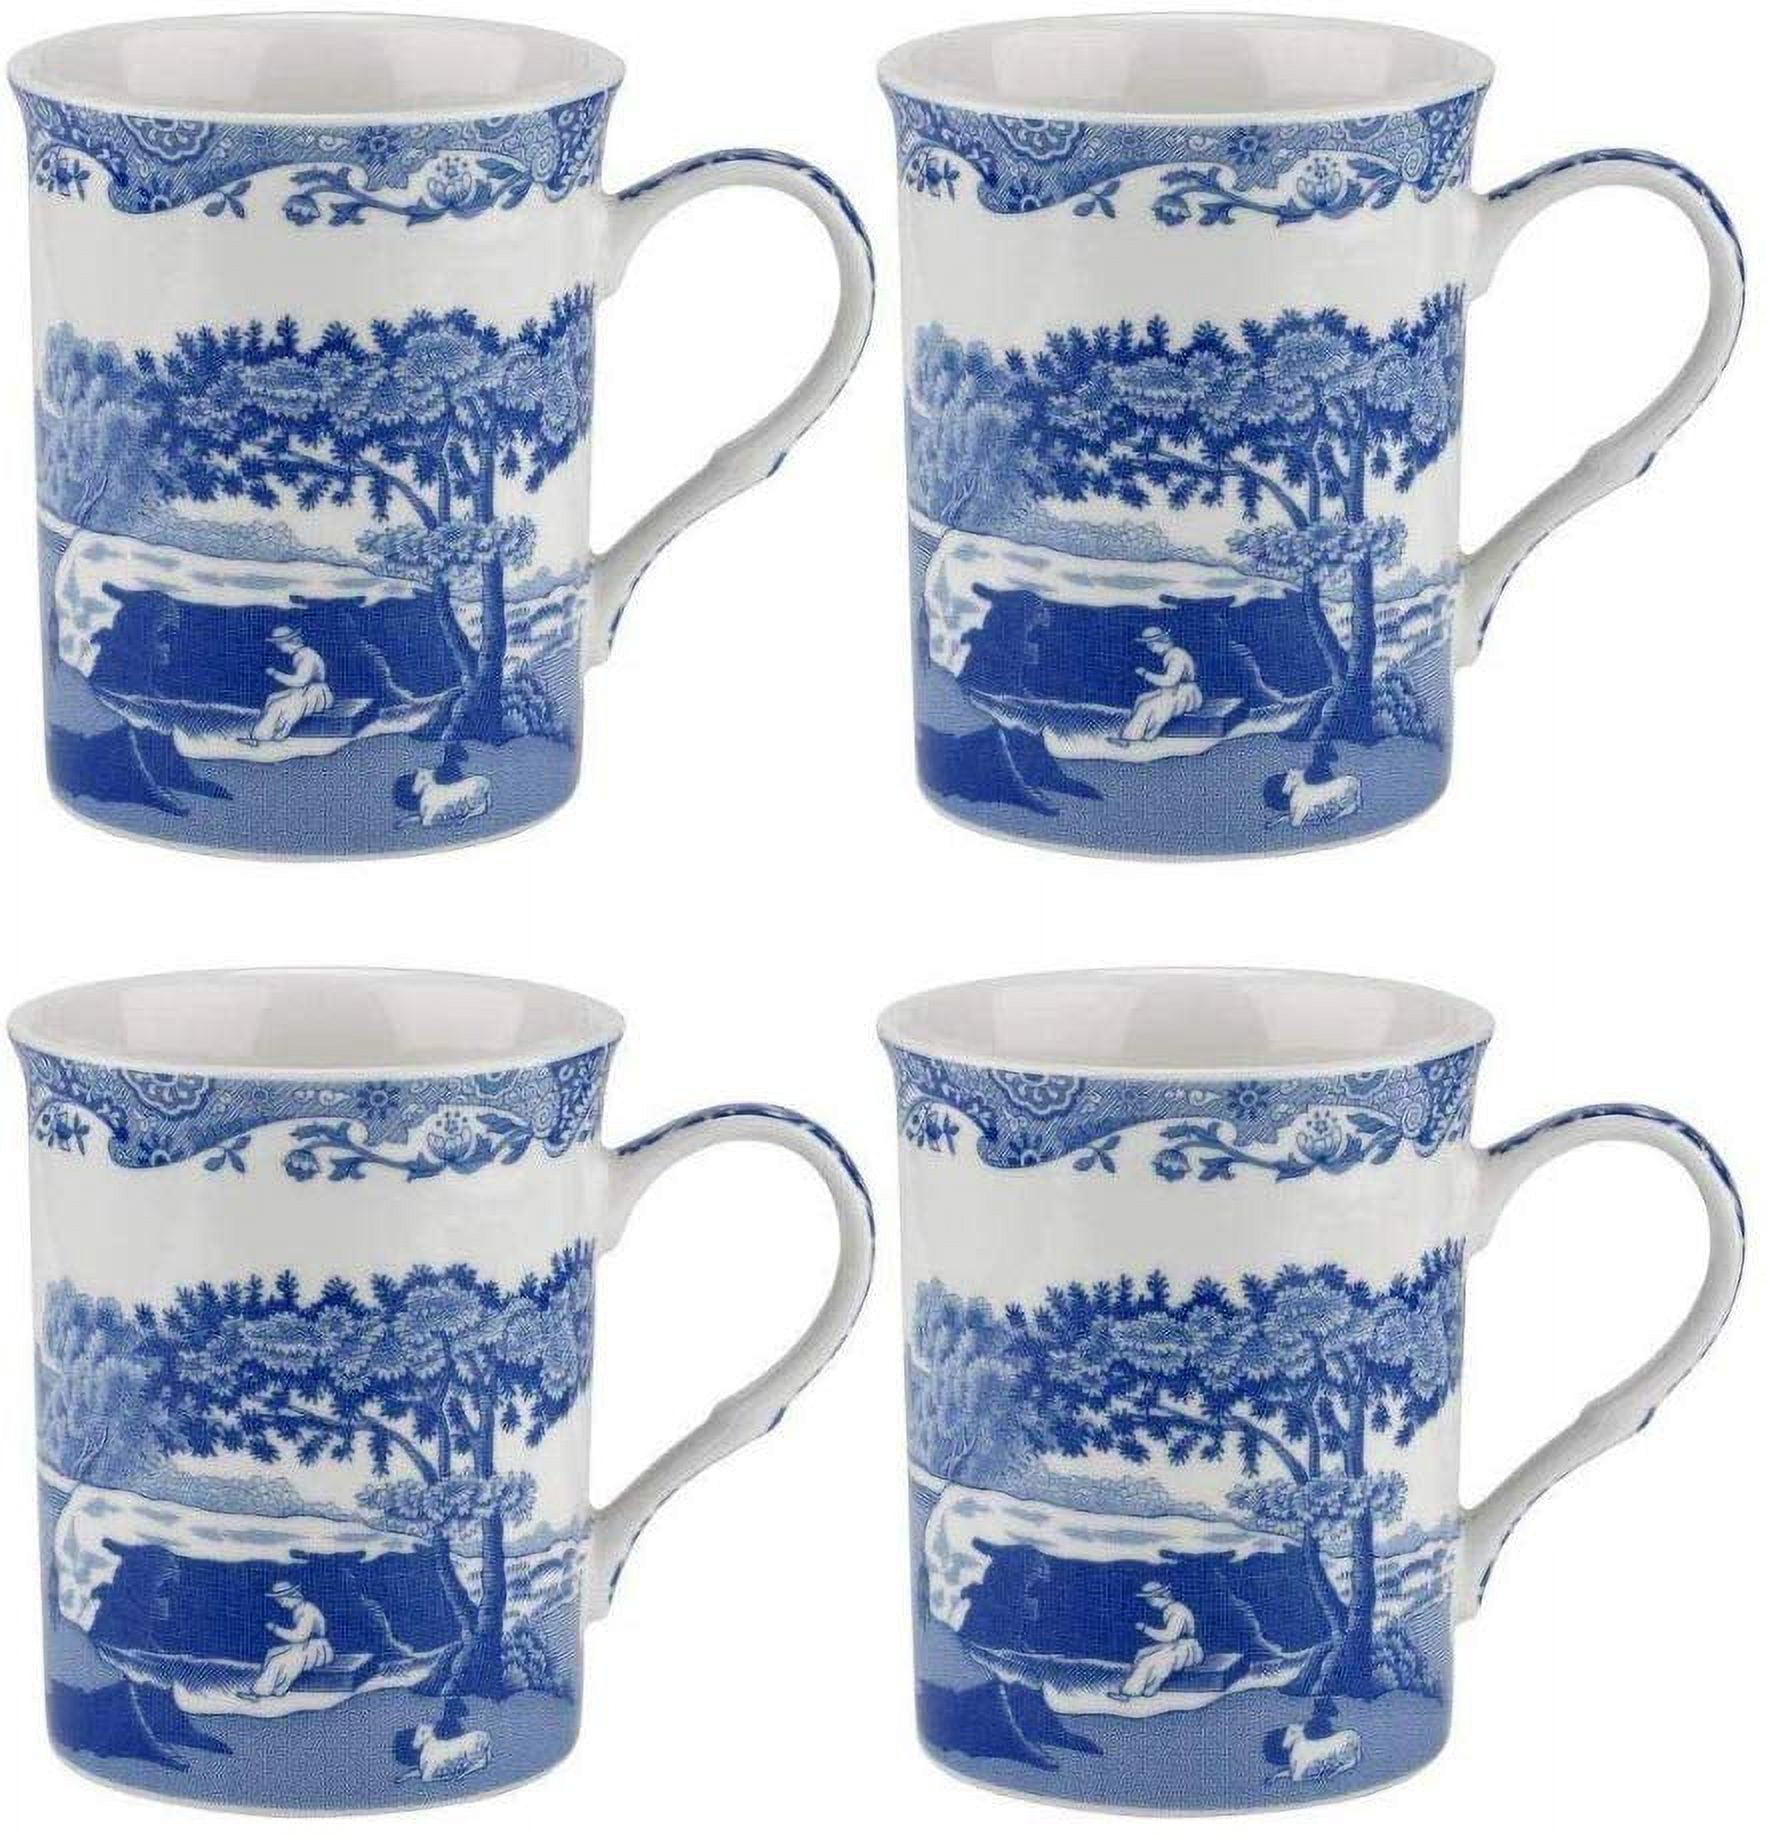 Spode Choice of Blue Italian Glassware on sale at shophq.com - 494